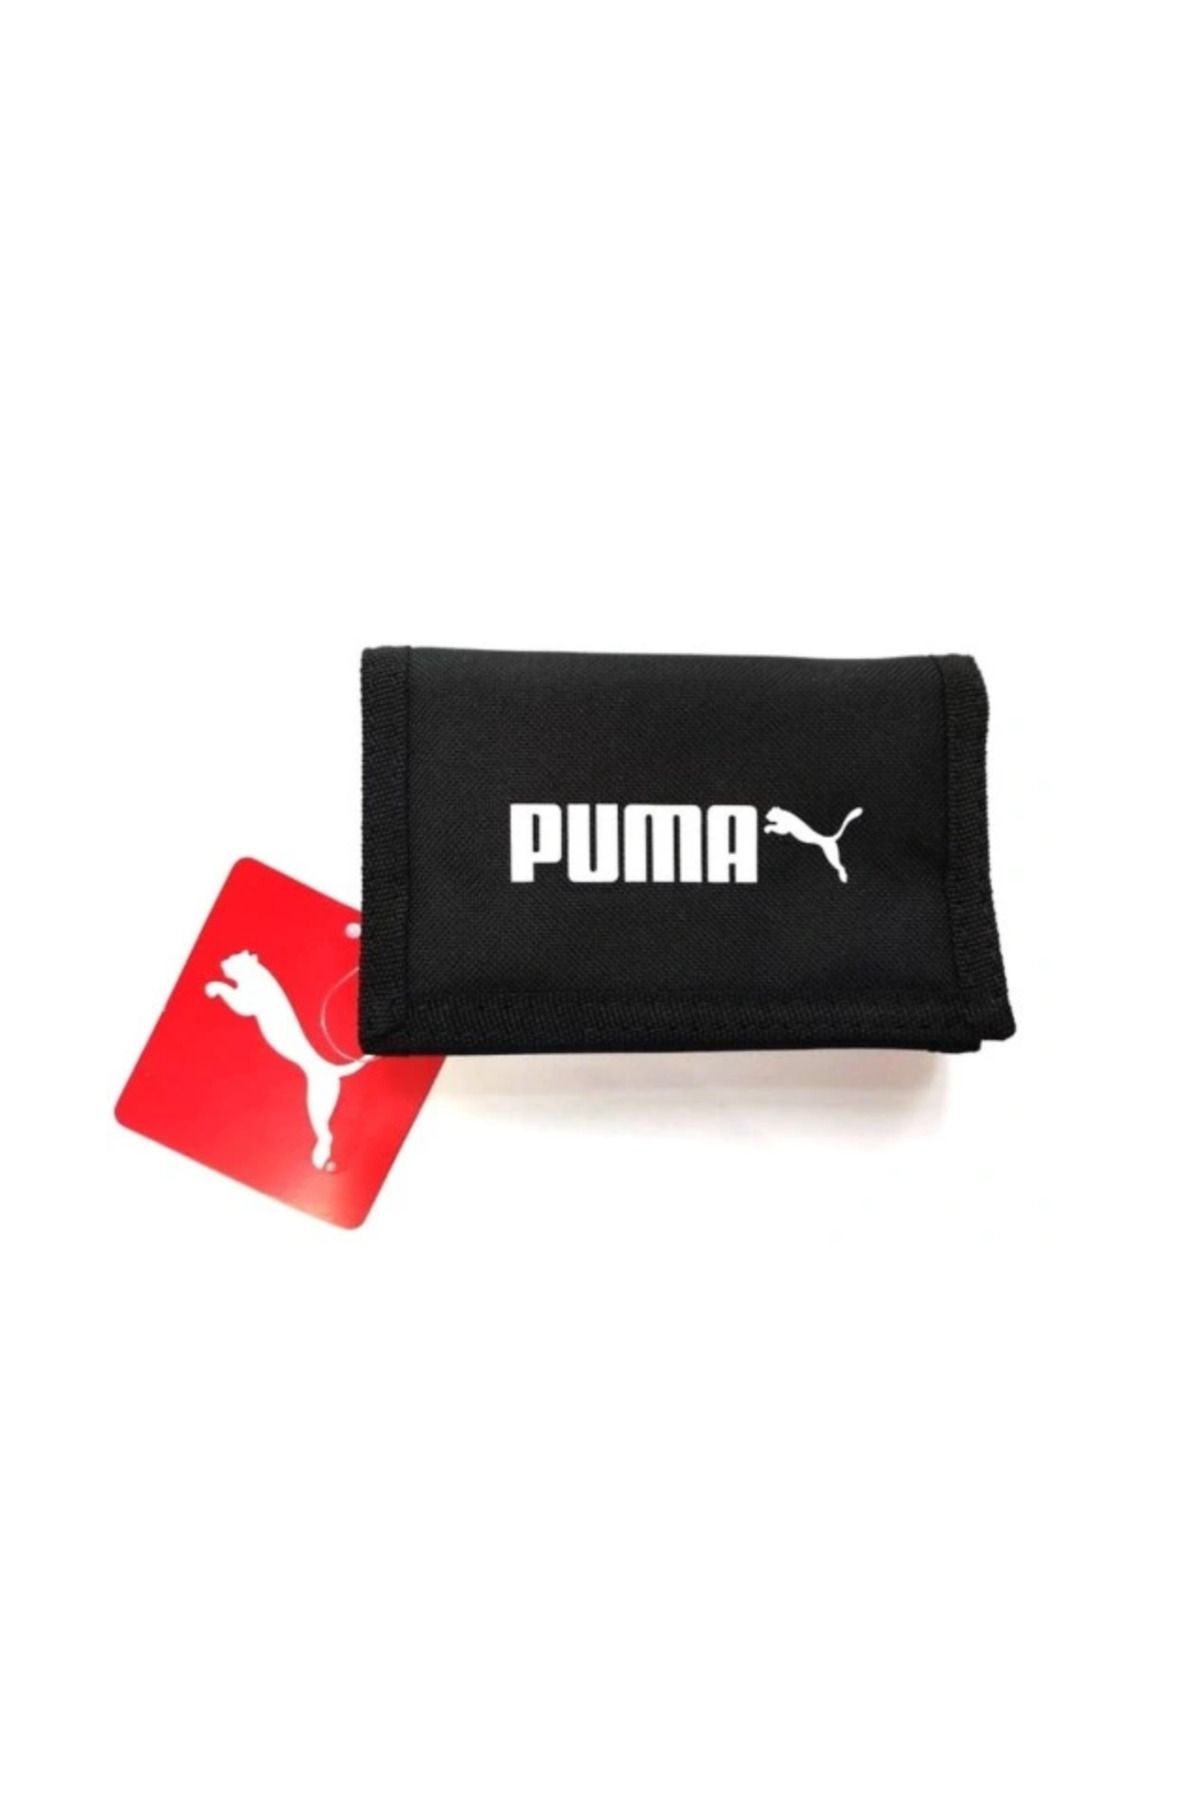 Puma phase II unisex black  wallet  siyah çüzdan 053956